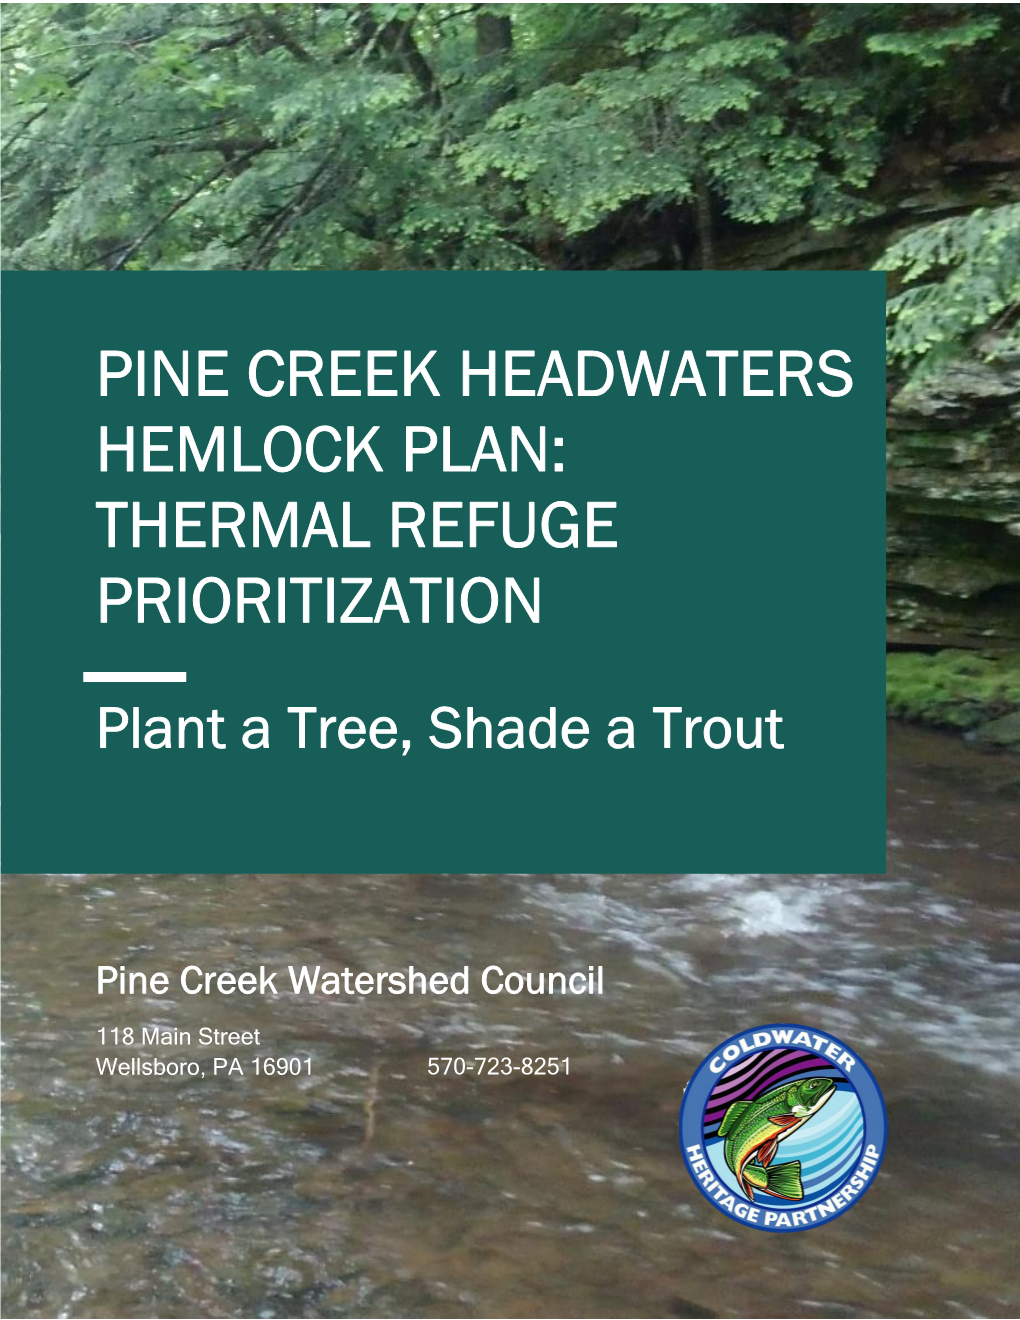 Pine Creek Headwaters Hemlock Plan: Thermal Refuge Prioritization